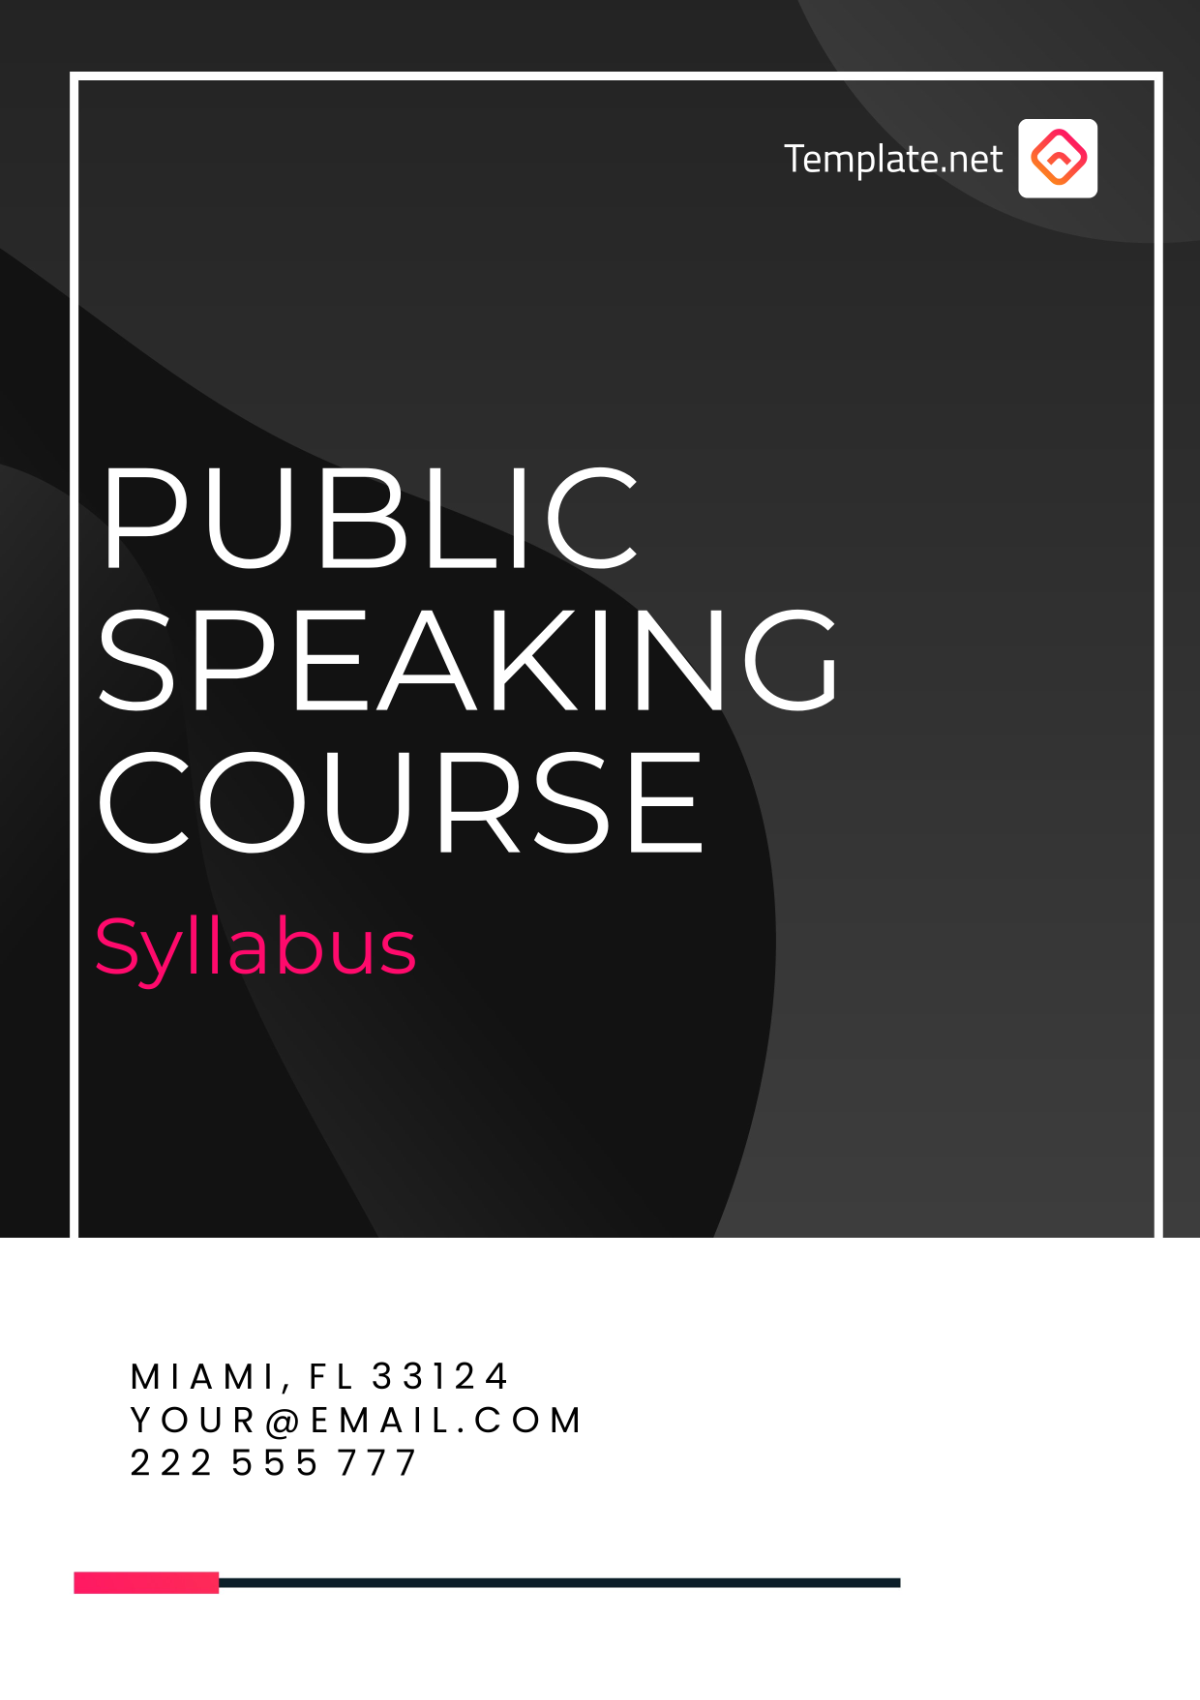 Public Speaking Course Syllabus Template